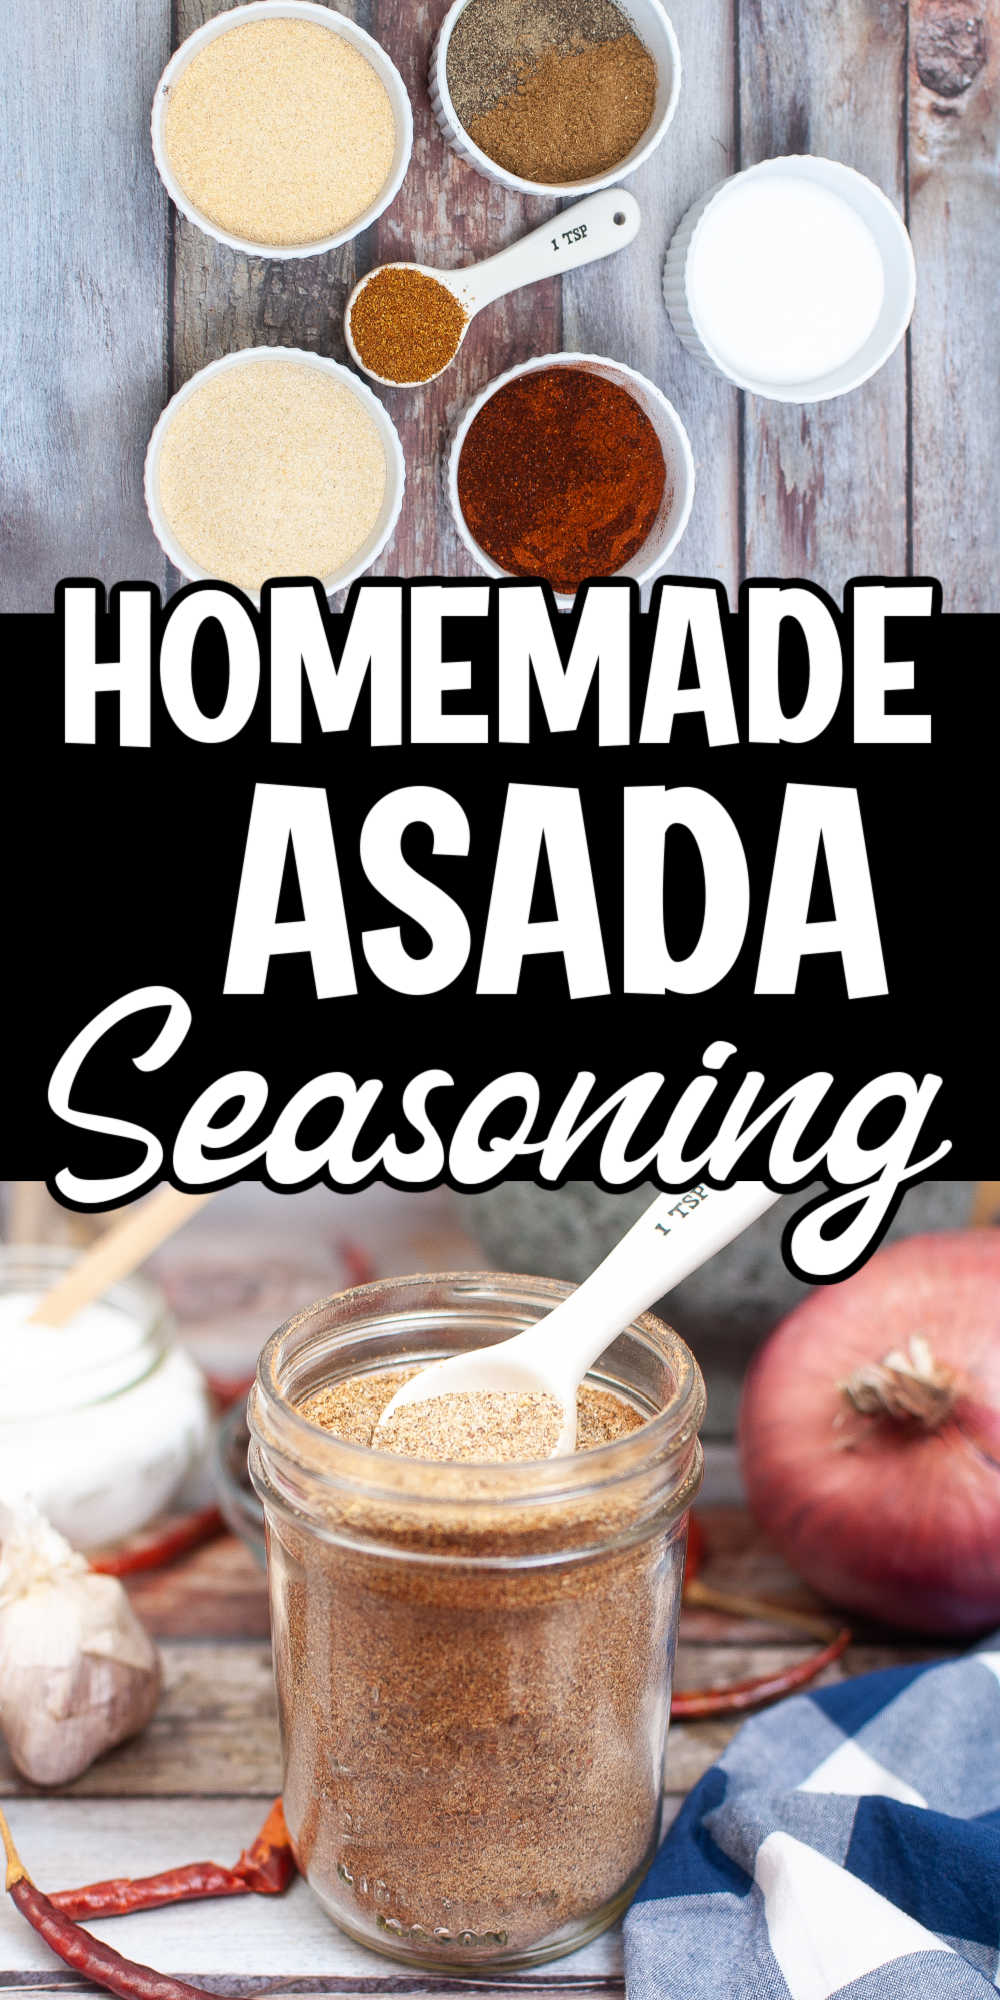 Image collage - top ingredients for asada seasoning, middle says "Homemade Asada Seasoning" and bottom has a pic of Asada seasoning in a jar.